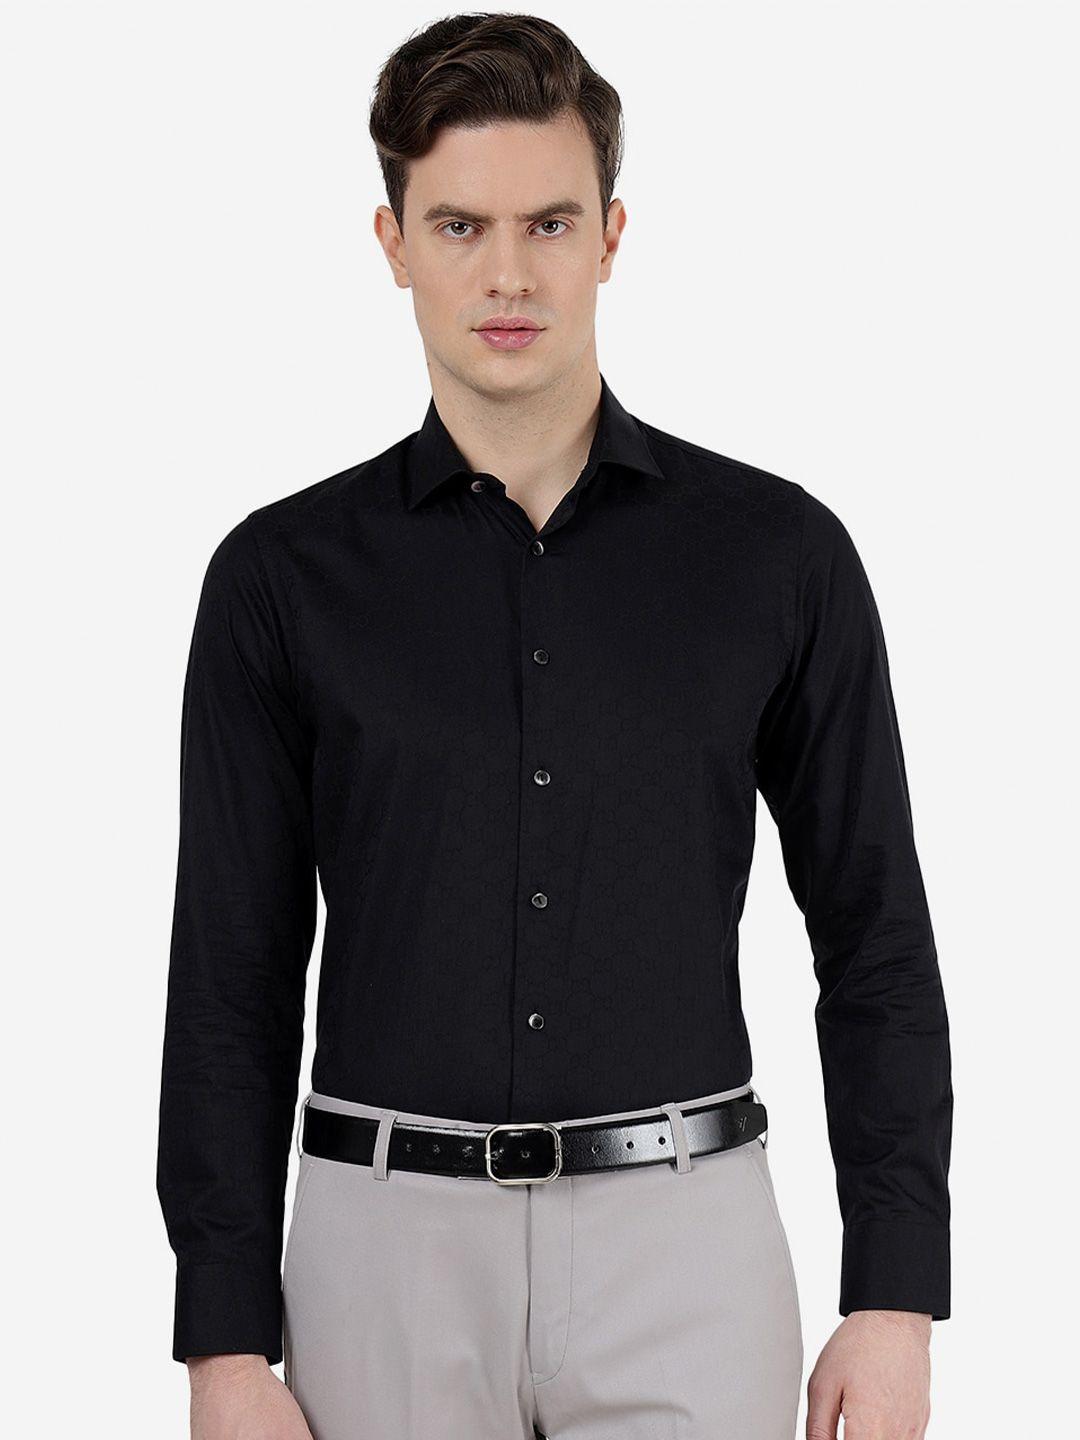 wyre spread collar long sleeves slim fit formal shirt